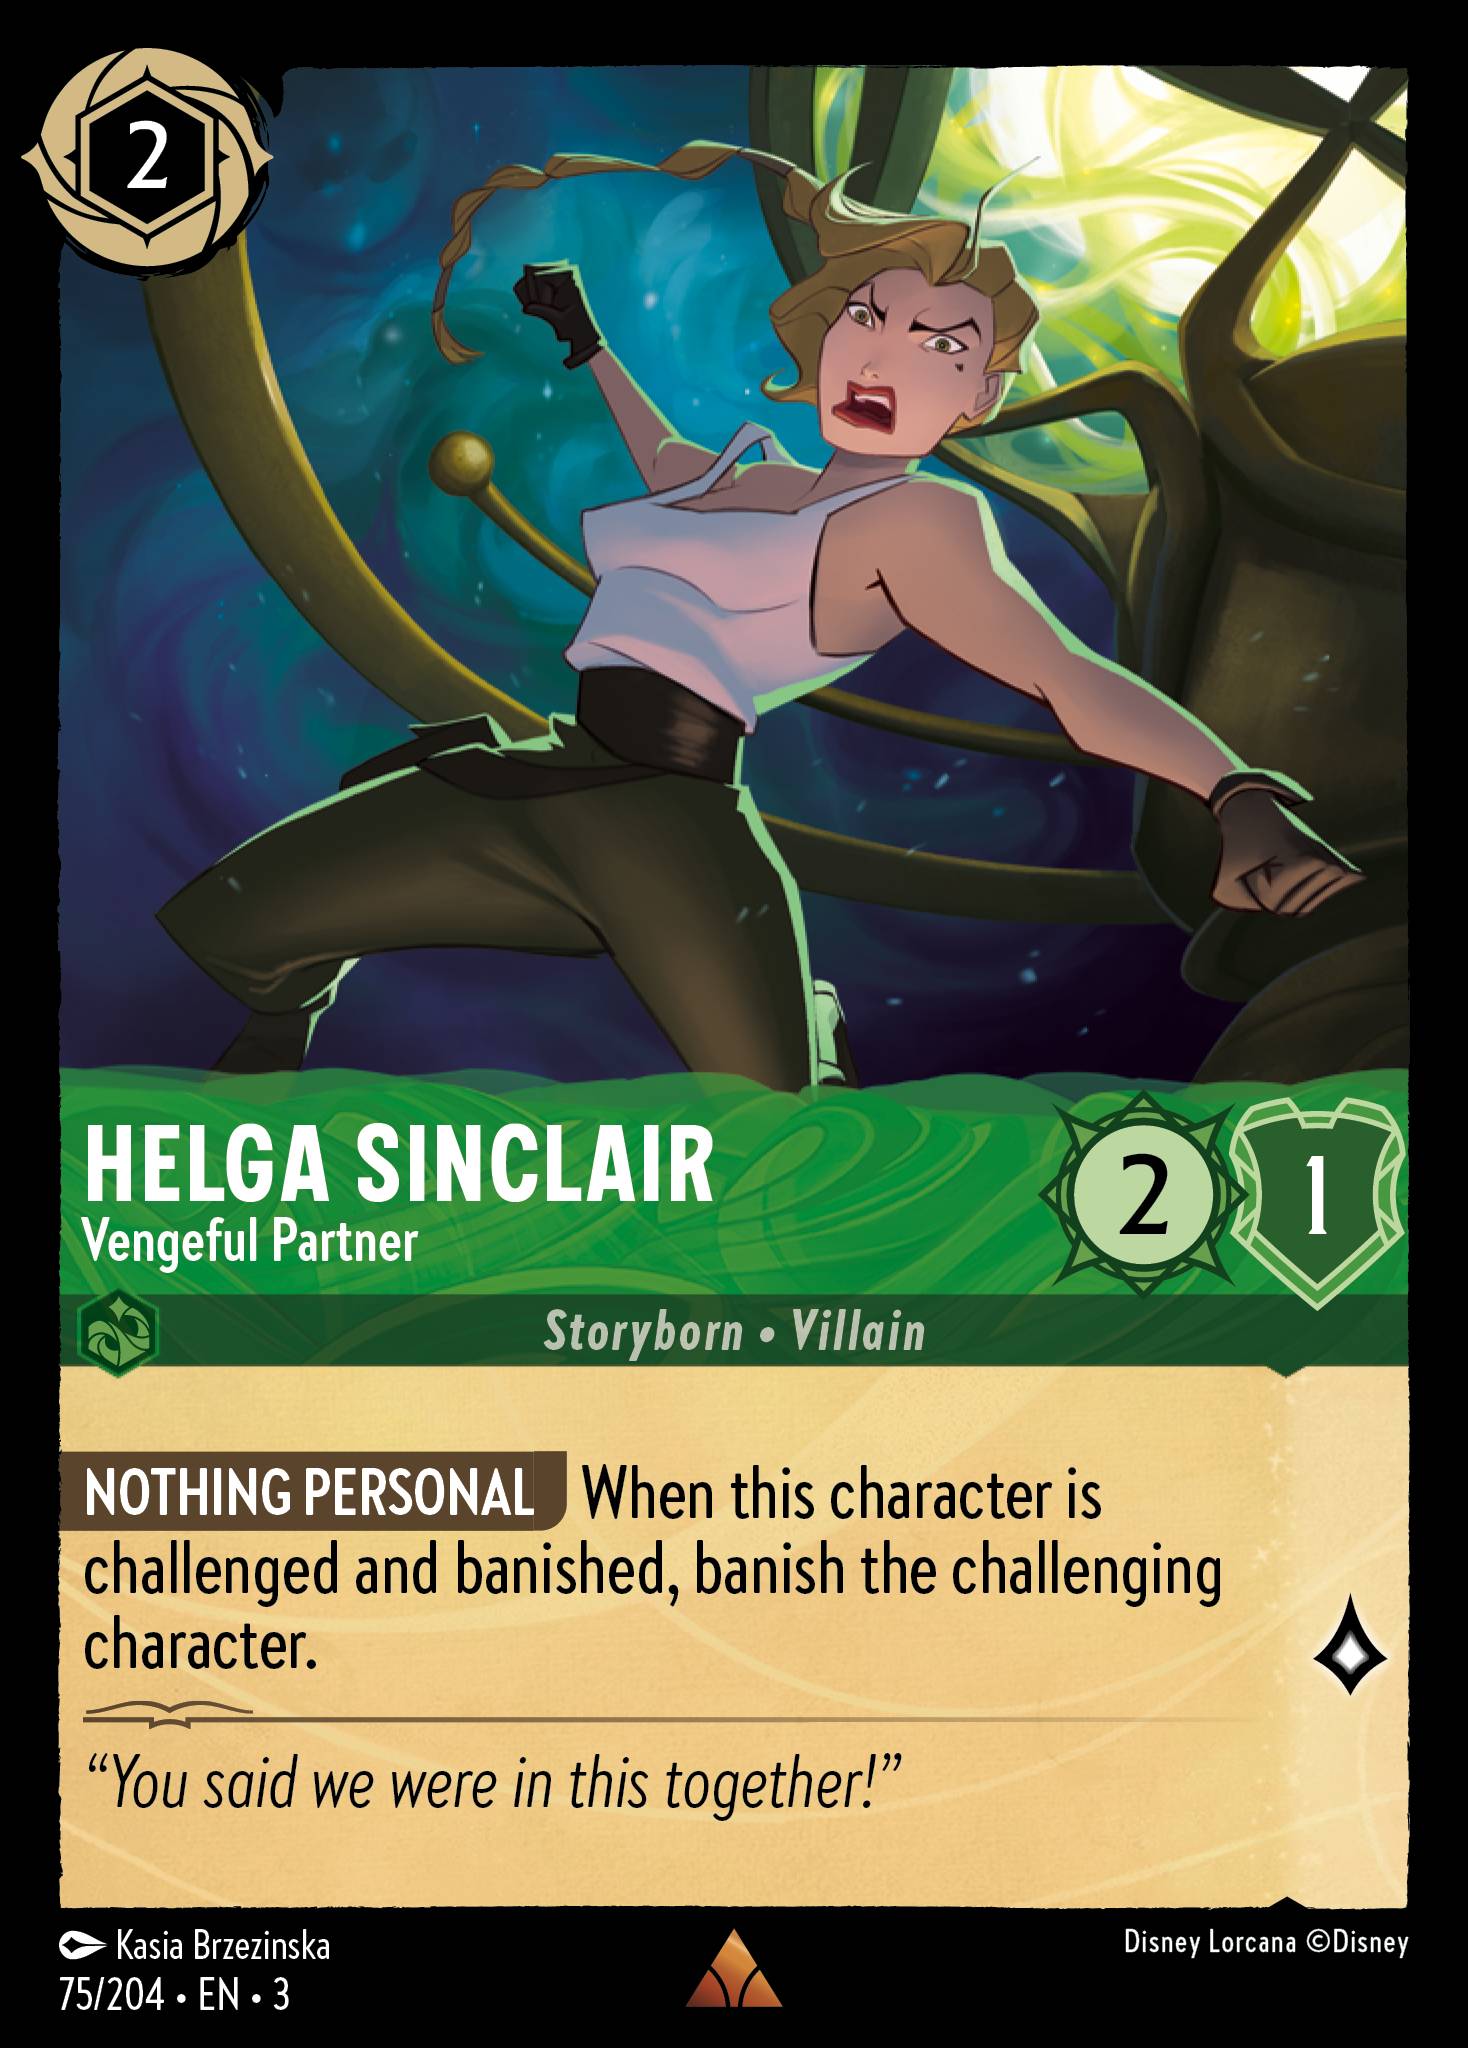 Helga Sinclair - Vengeful Partner